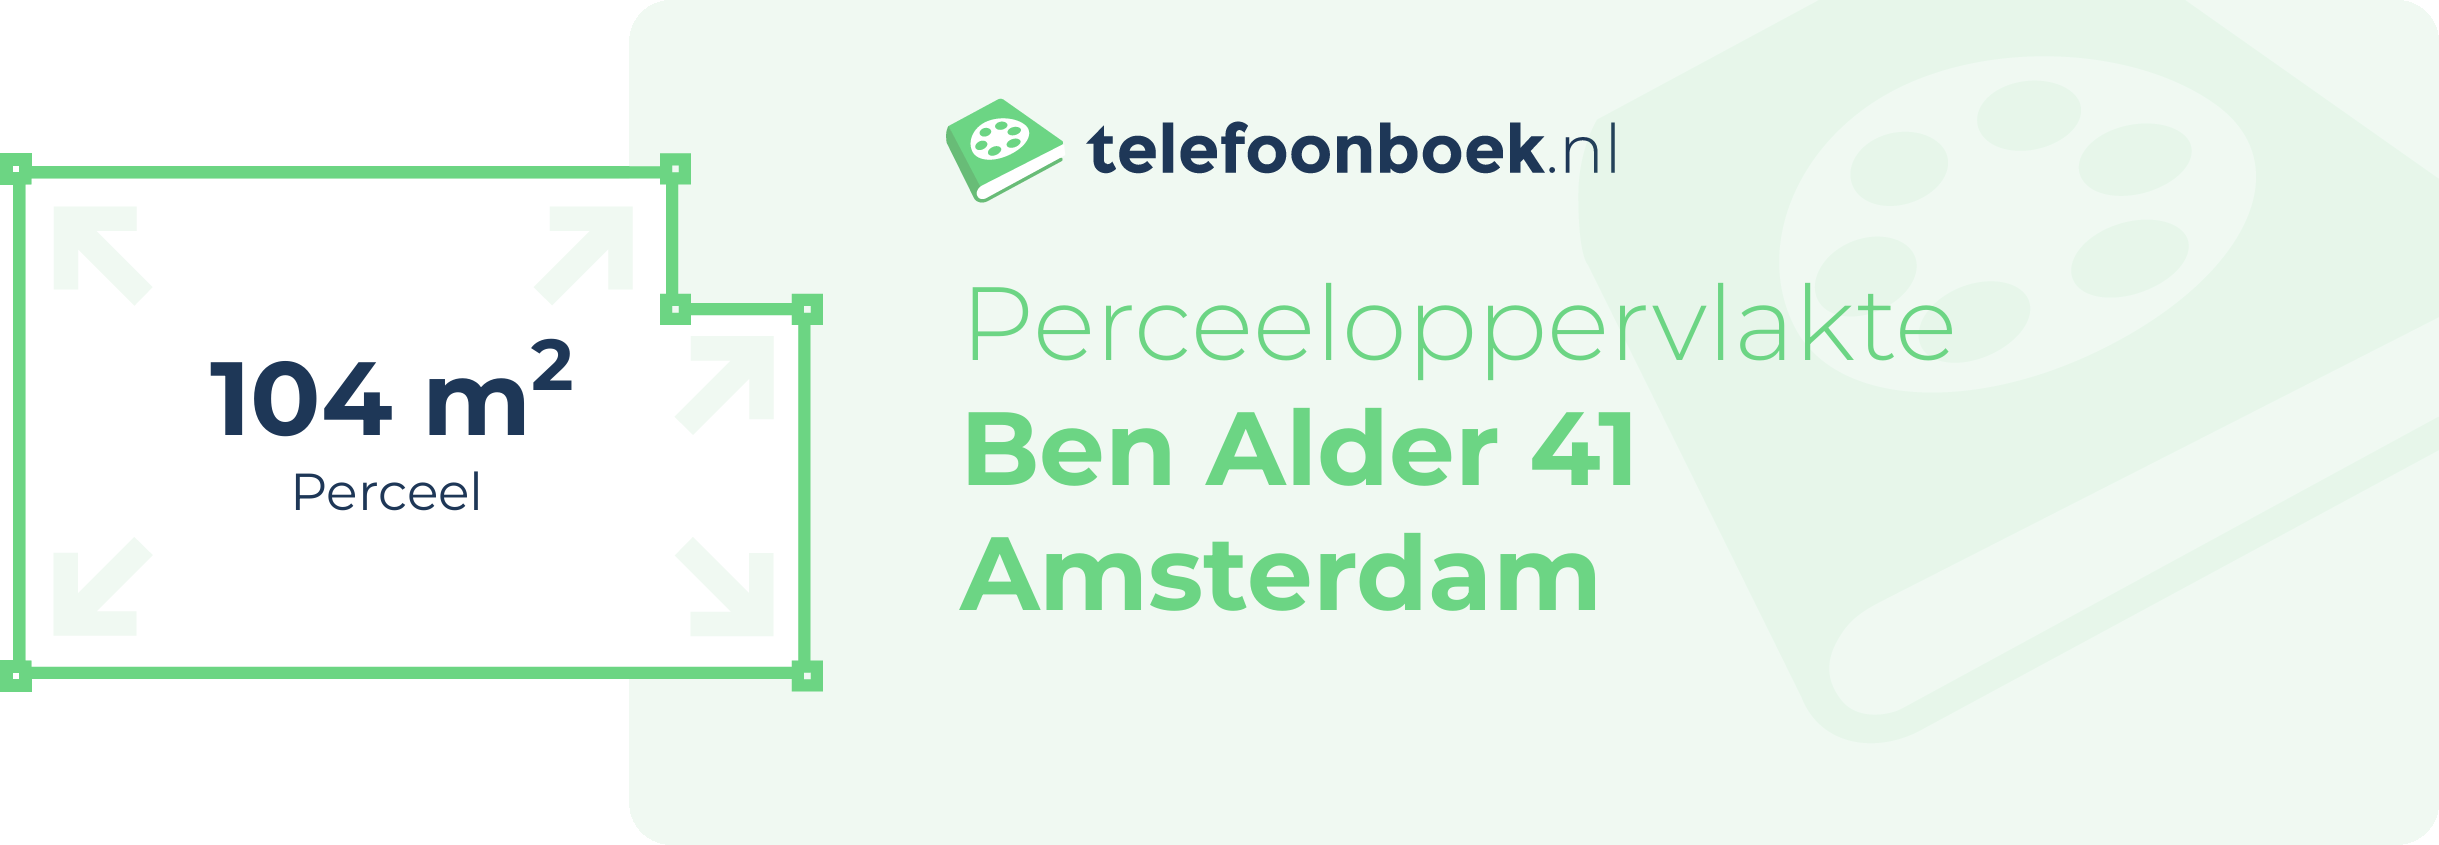 Perceeloppervlakte Ben Alder 41 Amsterdam